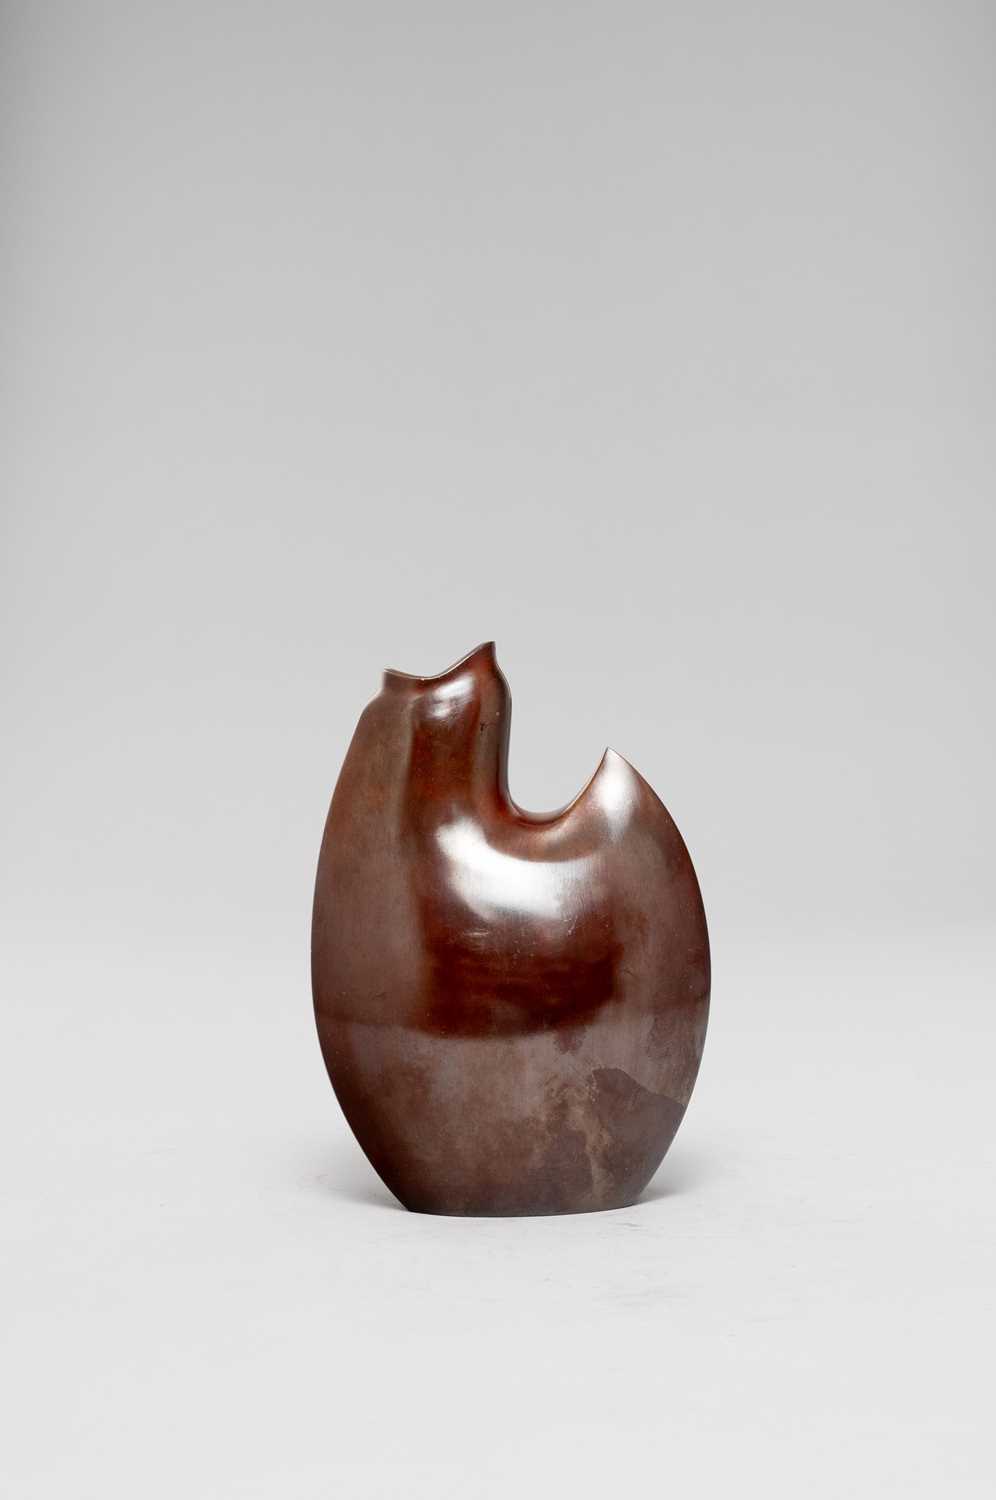 NO RESERVE NAKAJIMA YASUMI II (1905-86) SHOWA ERA, C.1960 A Japanese bronze vase cast as a